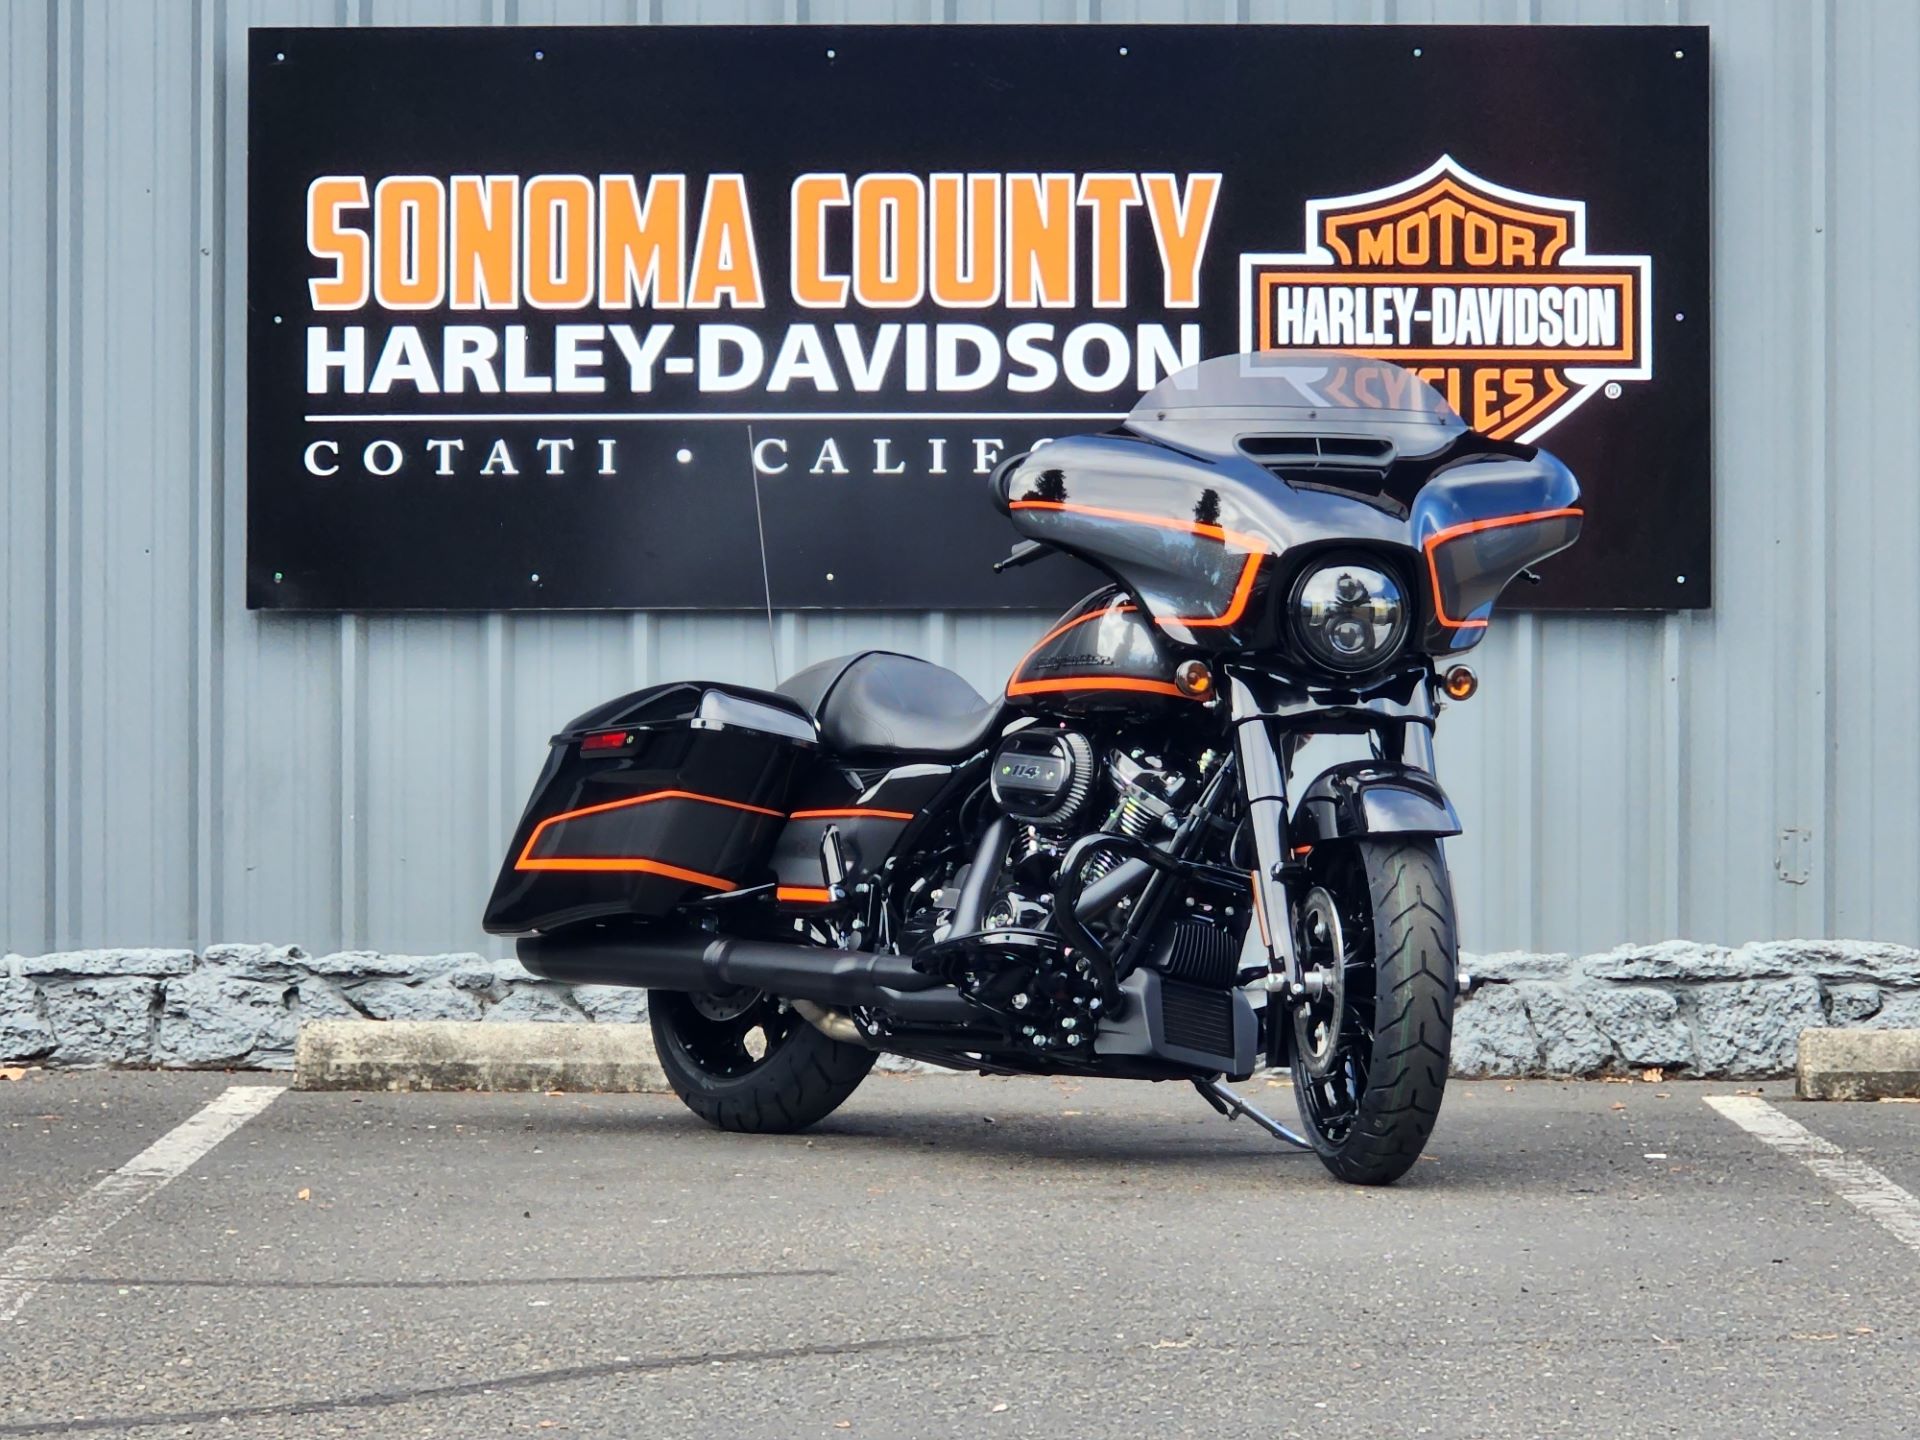 2022 Harley-Davidson Street Glide® Special in Cotati, California - Photo 2